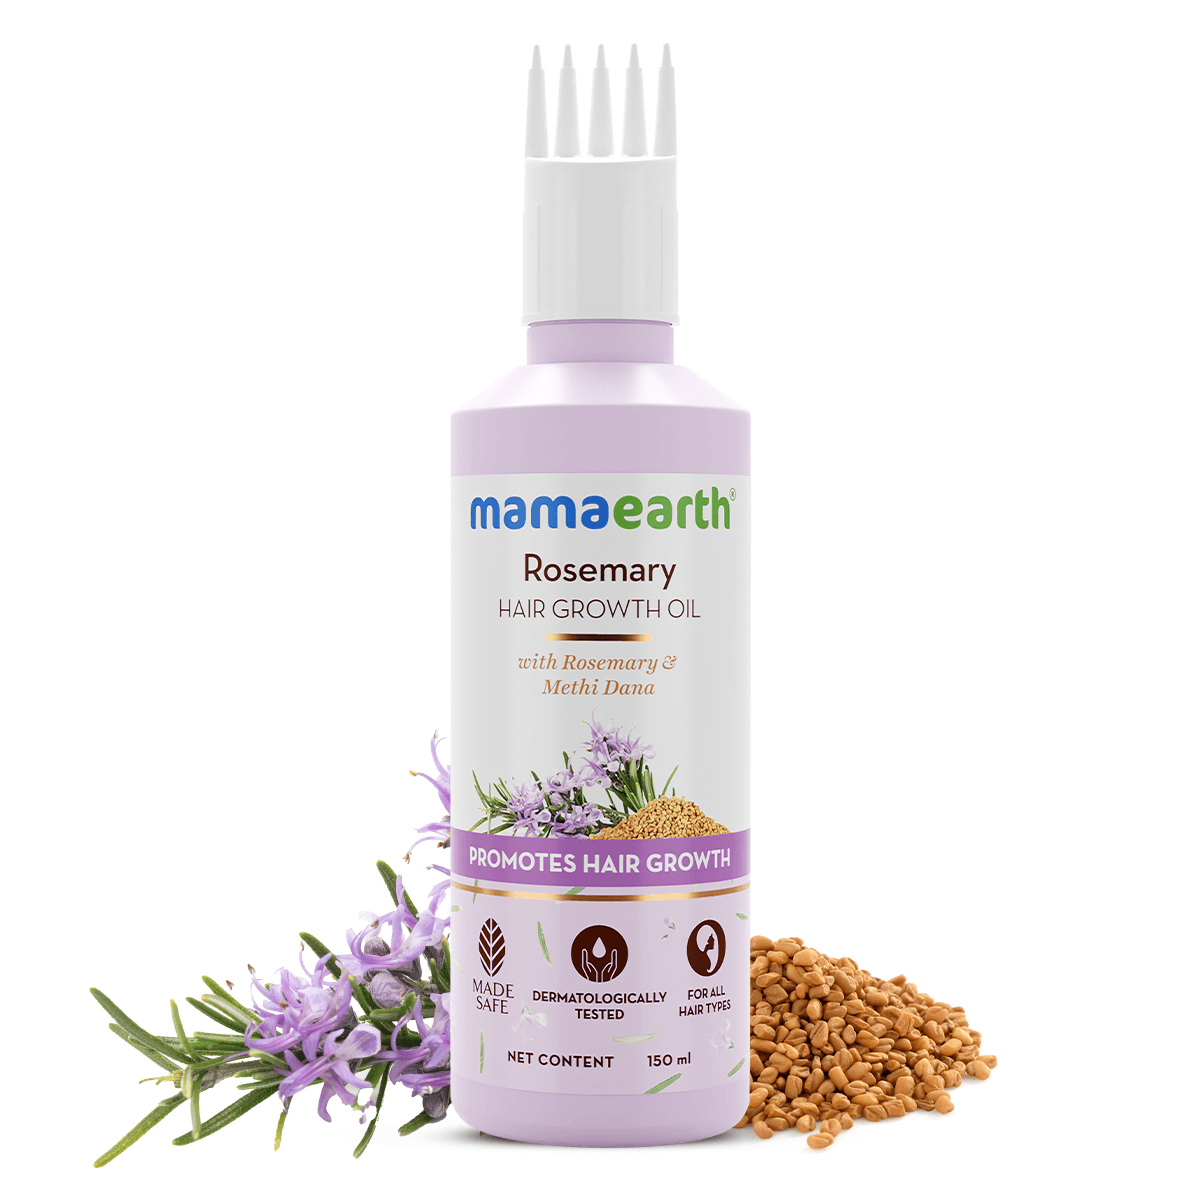 rosemary hair growth oil with rosemary & methi dana for promoting hair growth - 150 ml